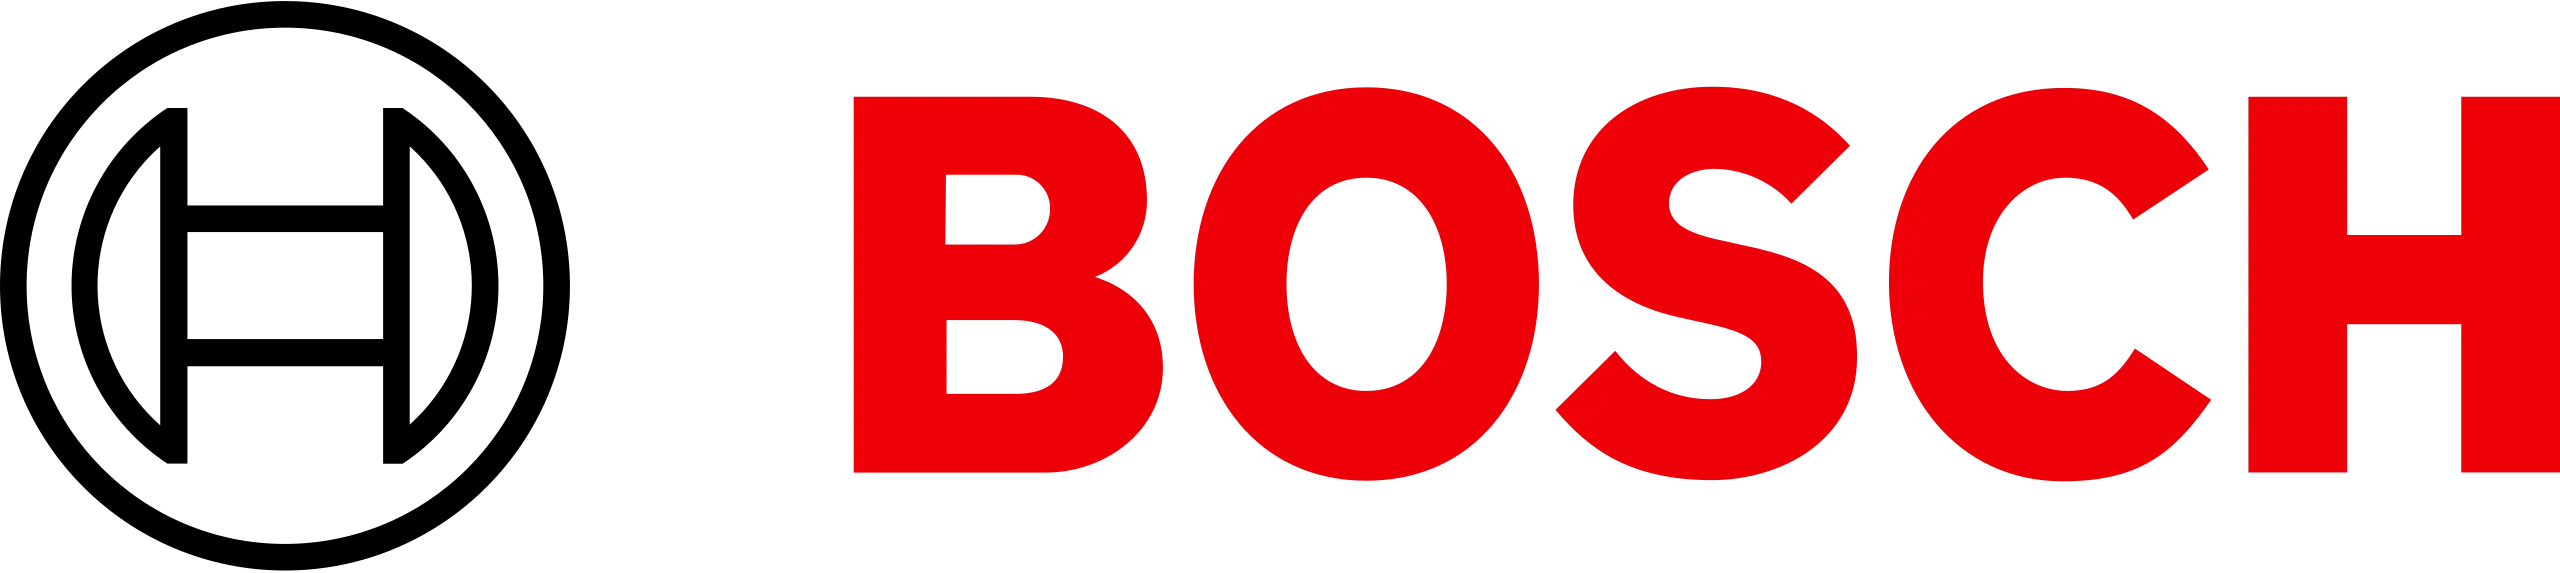 logo-博世家電